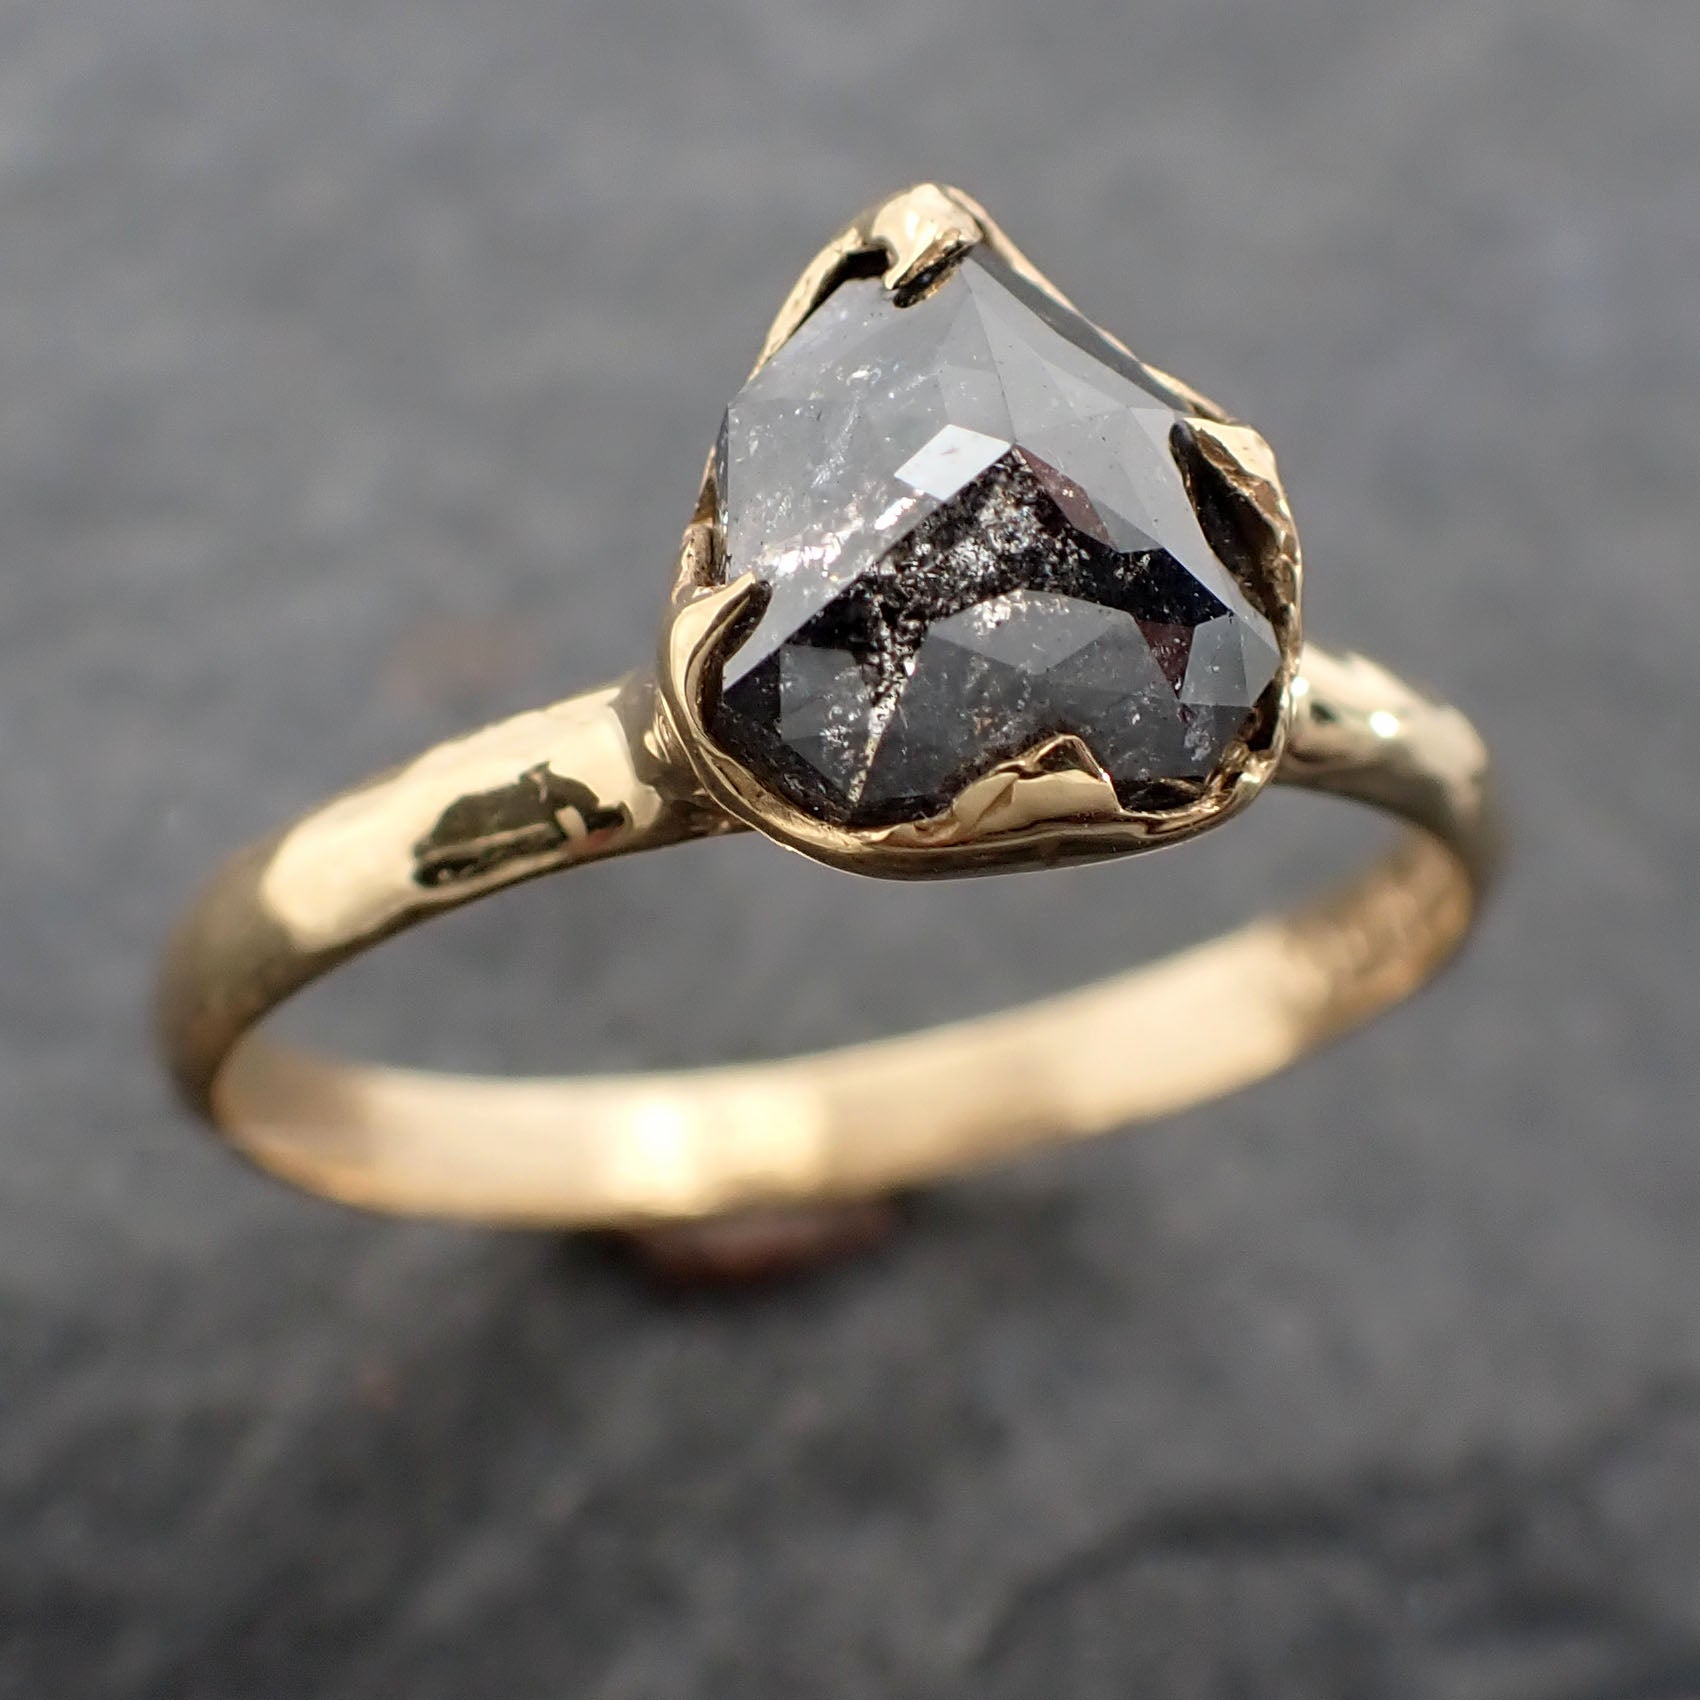 Fancy cut salt and pepper Diamond Solitaire Engagement 14k yellow Gold Wedding Ring Diamond Ring byAngeline 2418